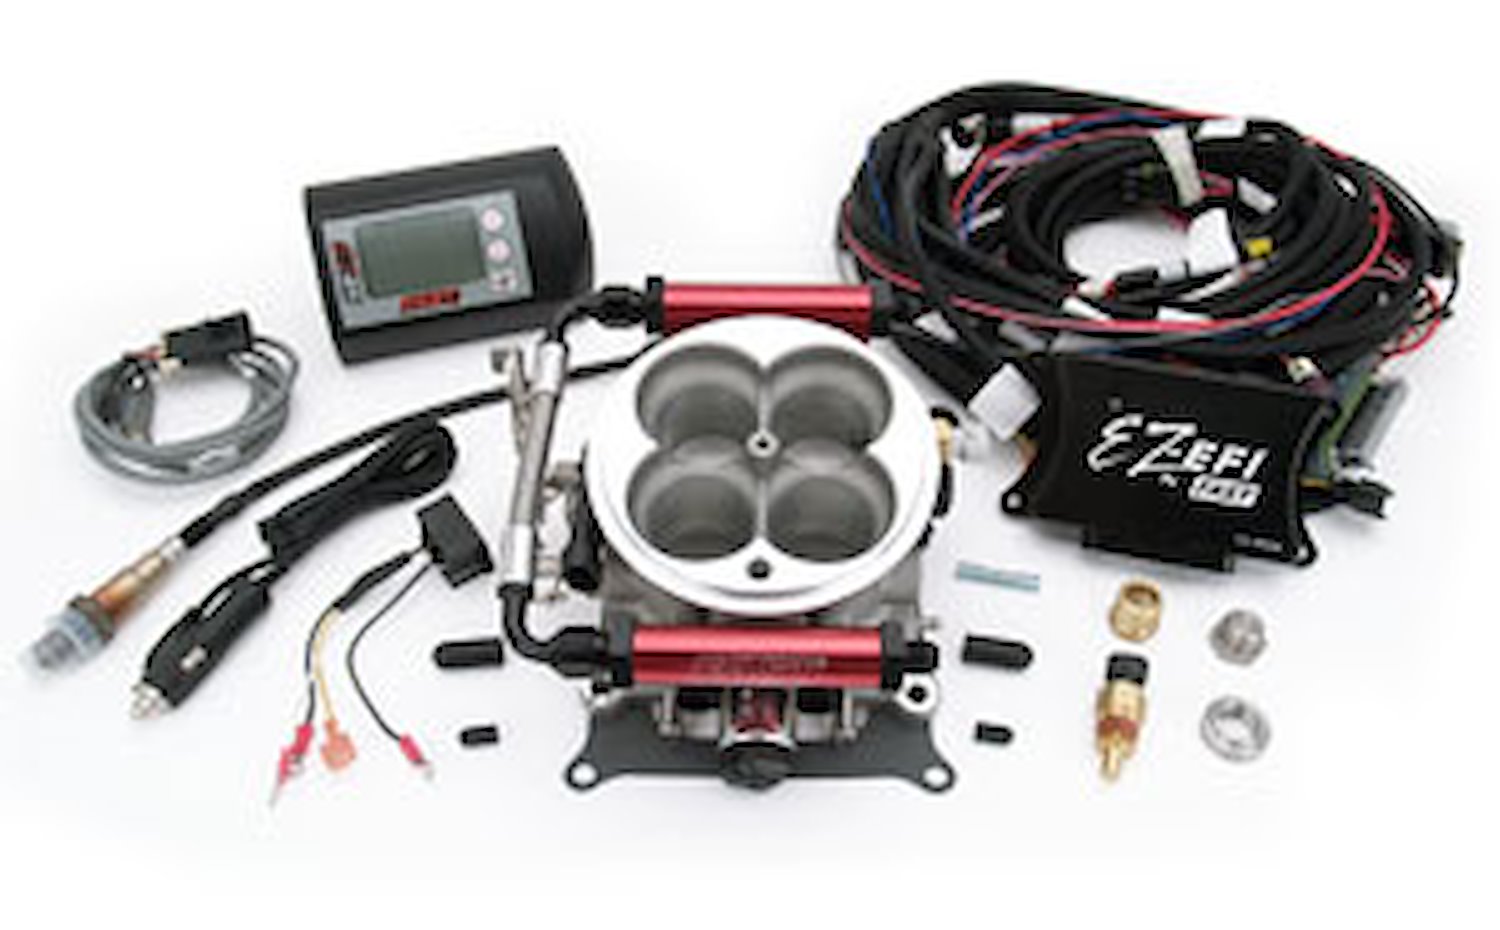 EZ-EFI Self-Tuning Fuel Injection Base Kit Includes: Throttle Body